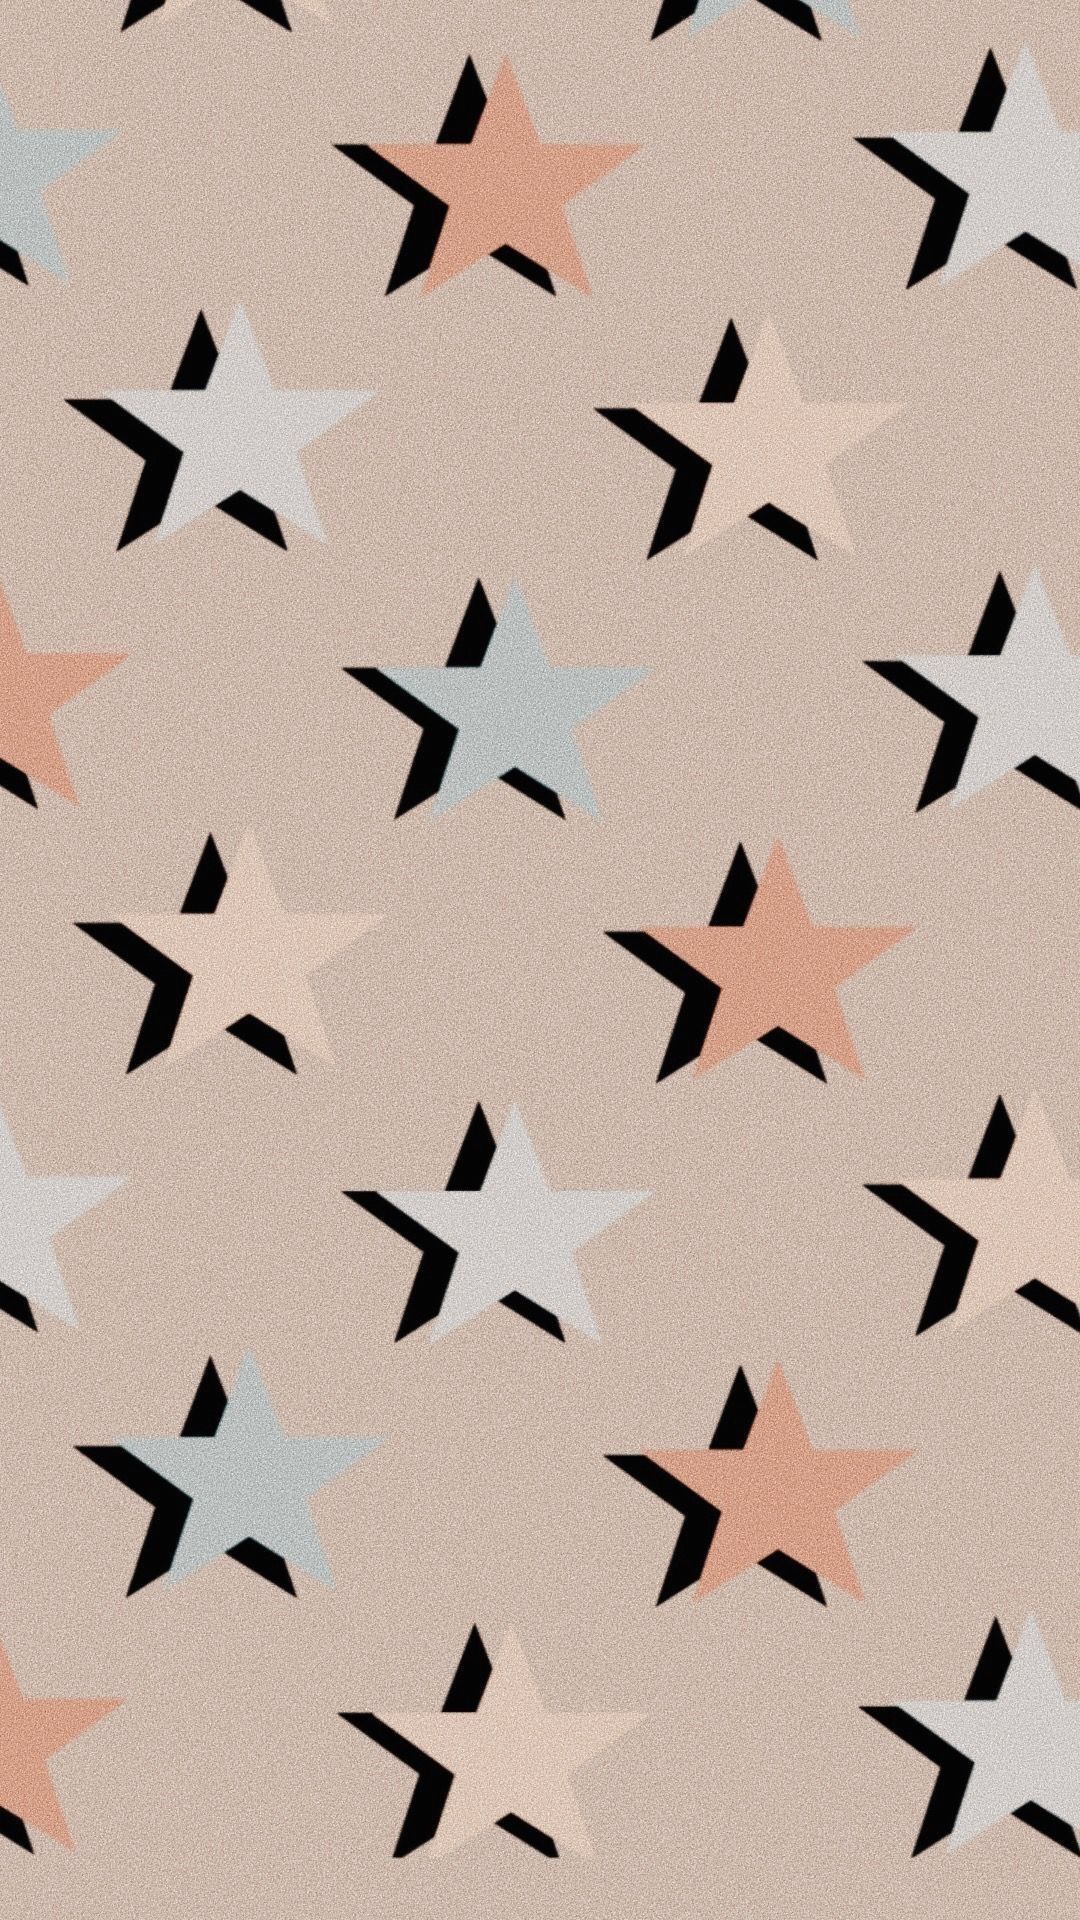 ♡burgundy linen Stars♡. iPhone wallpaper pattern, iPhone wallpaper vsco, Cute patterns wallpaper